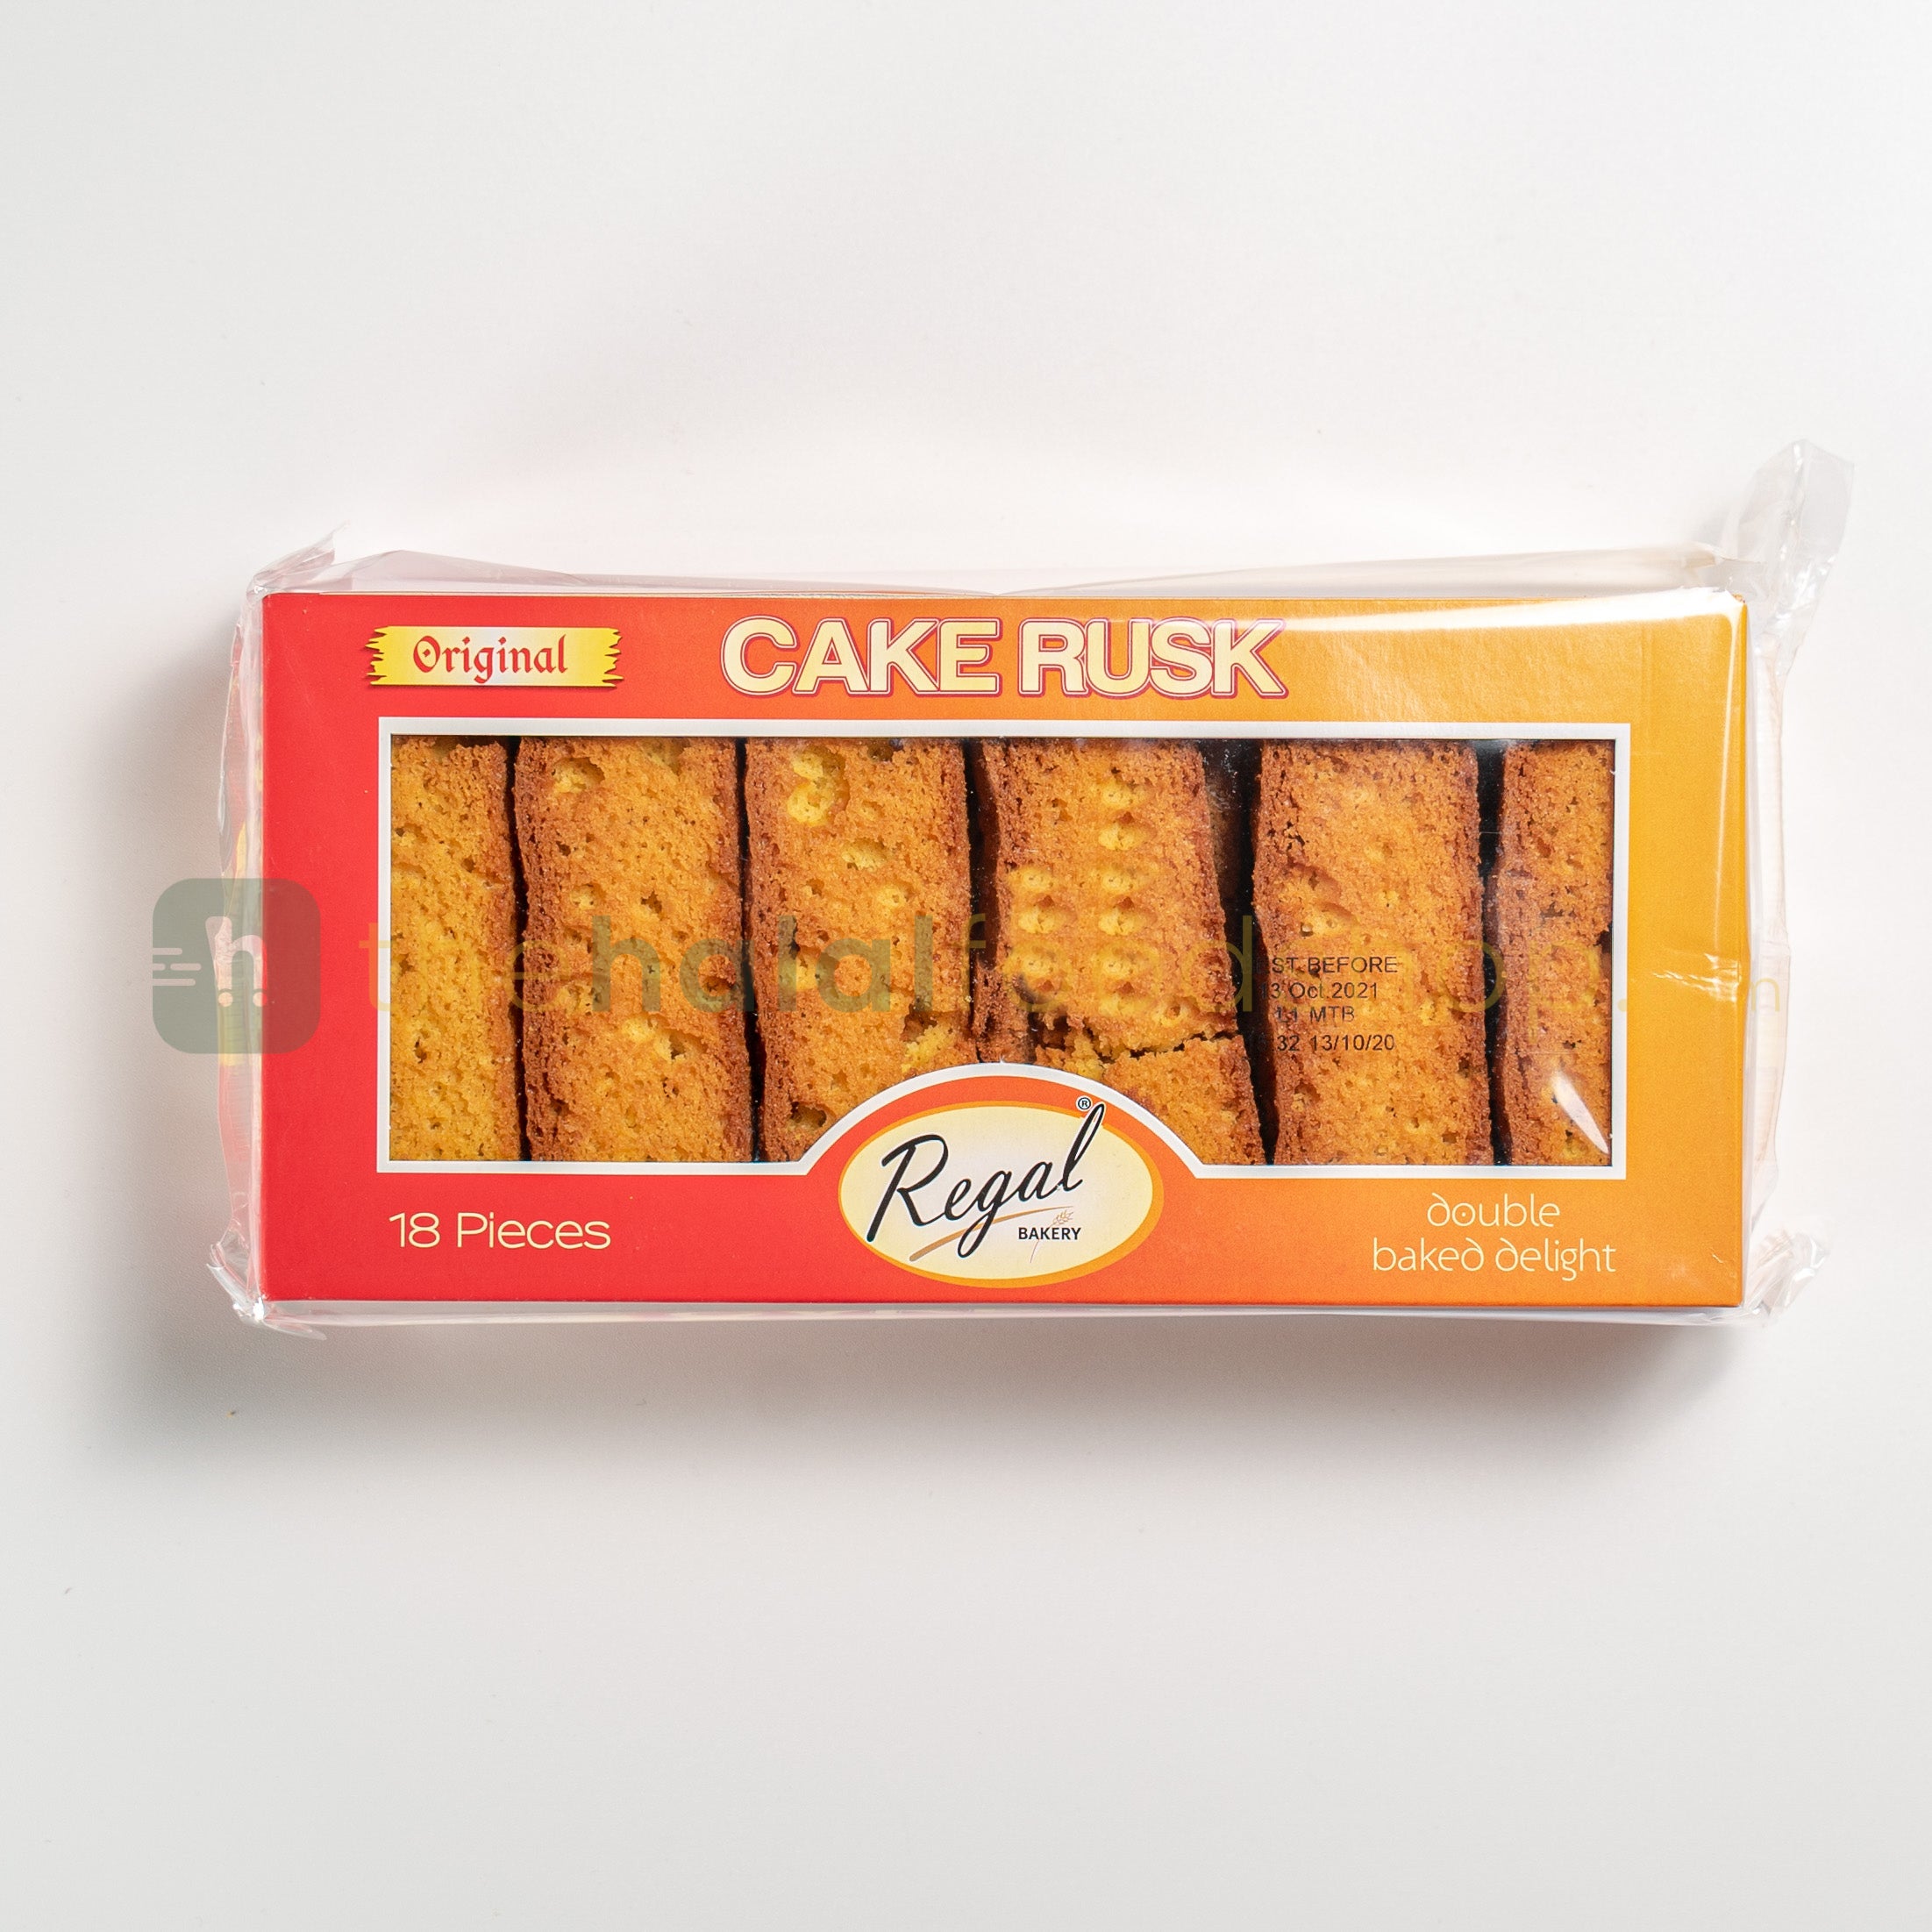 Regal Cake Rusk Original 18pcs (550g)